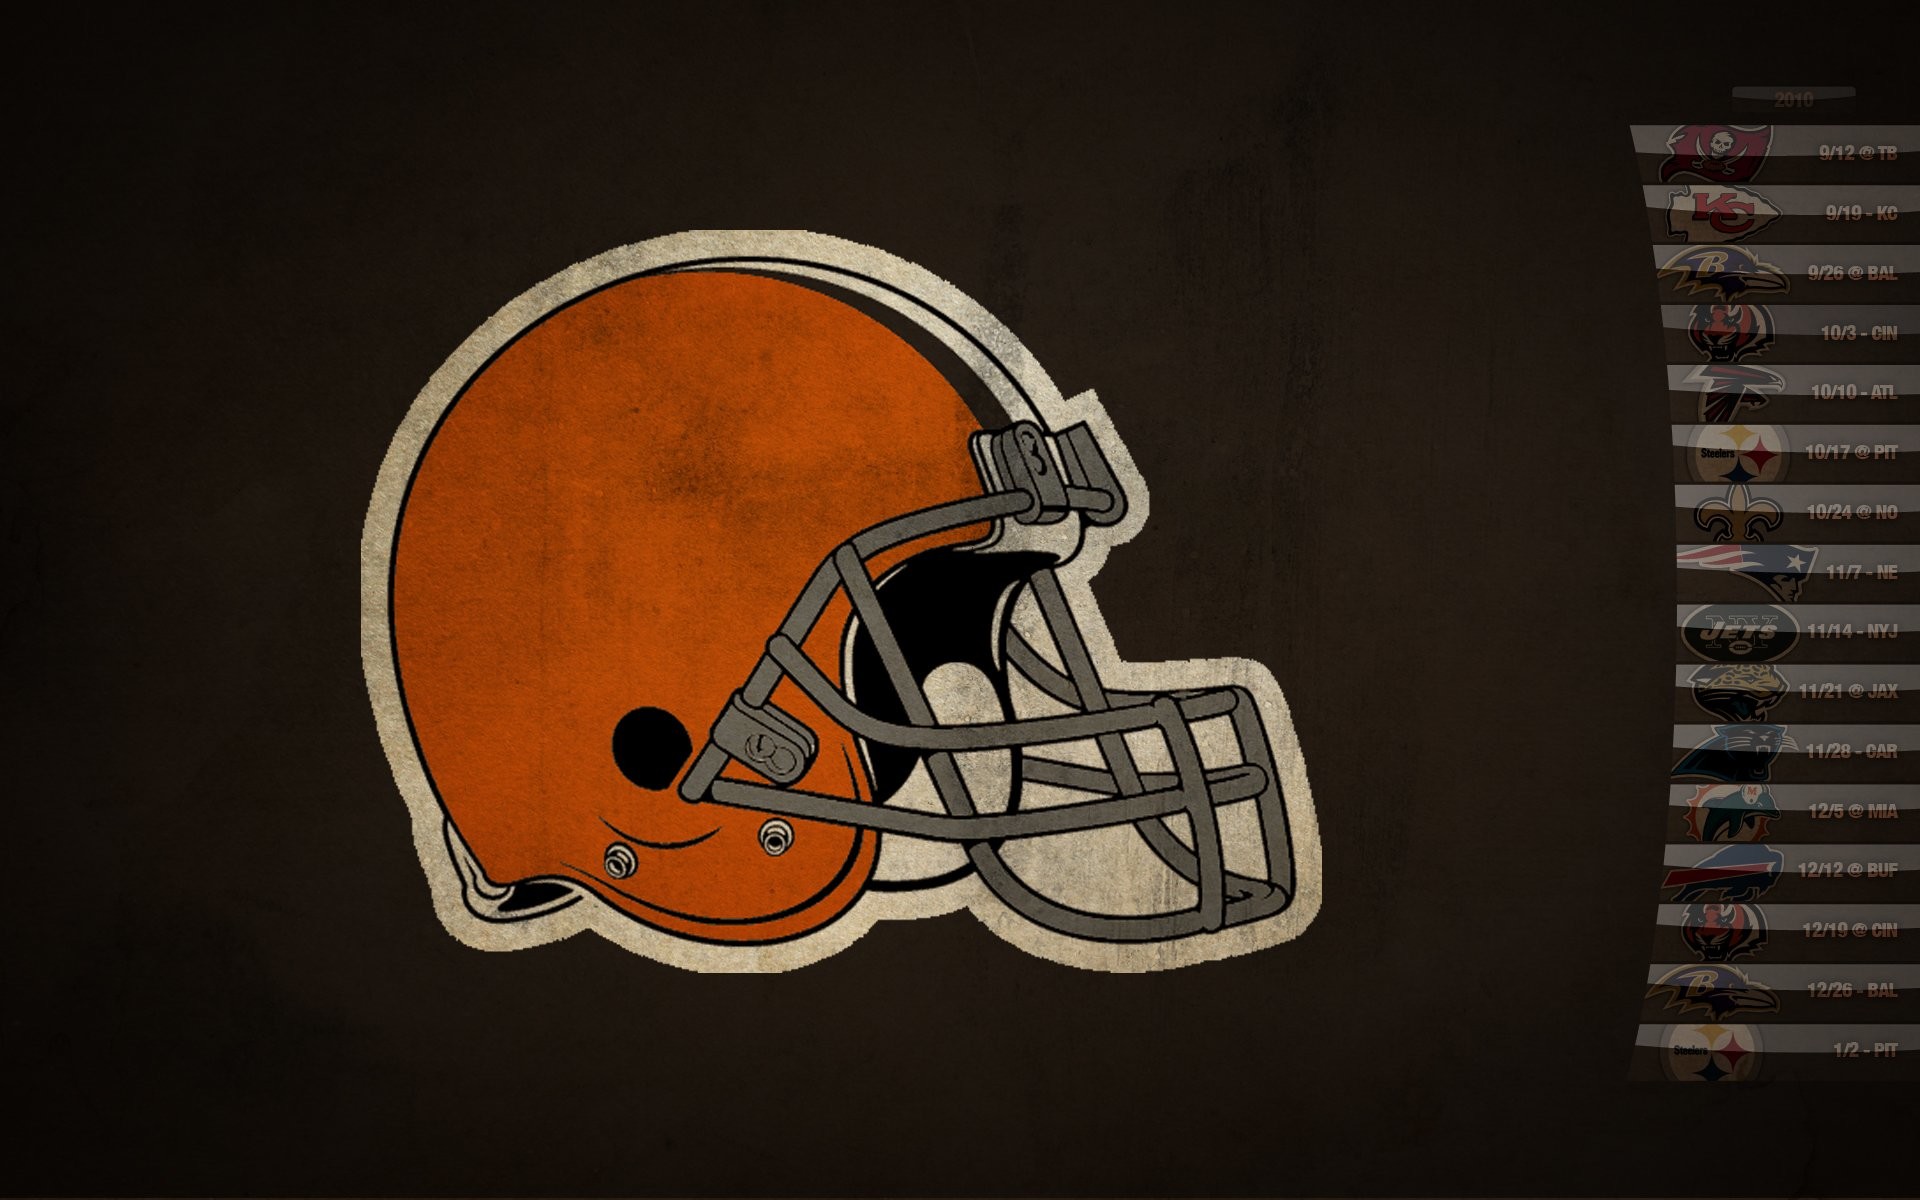 Cleveland Browns American Football SBR HD Cleveland Browns Wallpapers  HD  Wallpapers  ID 45974